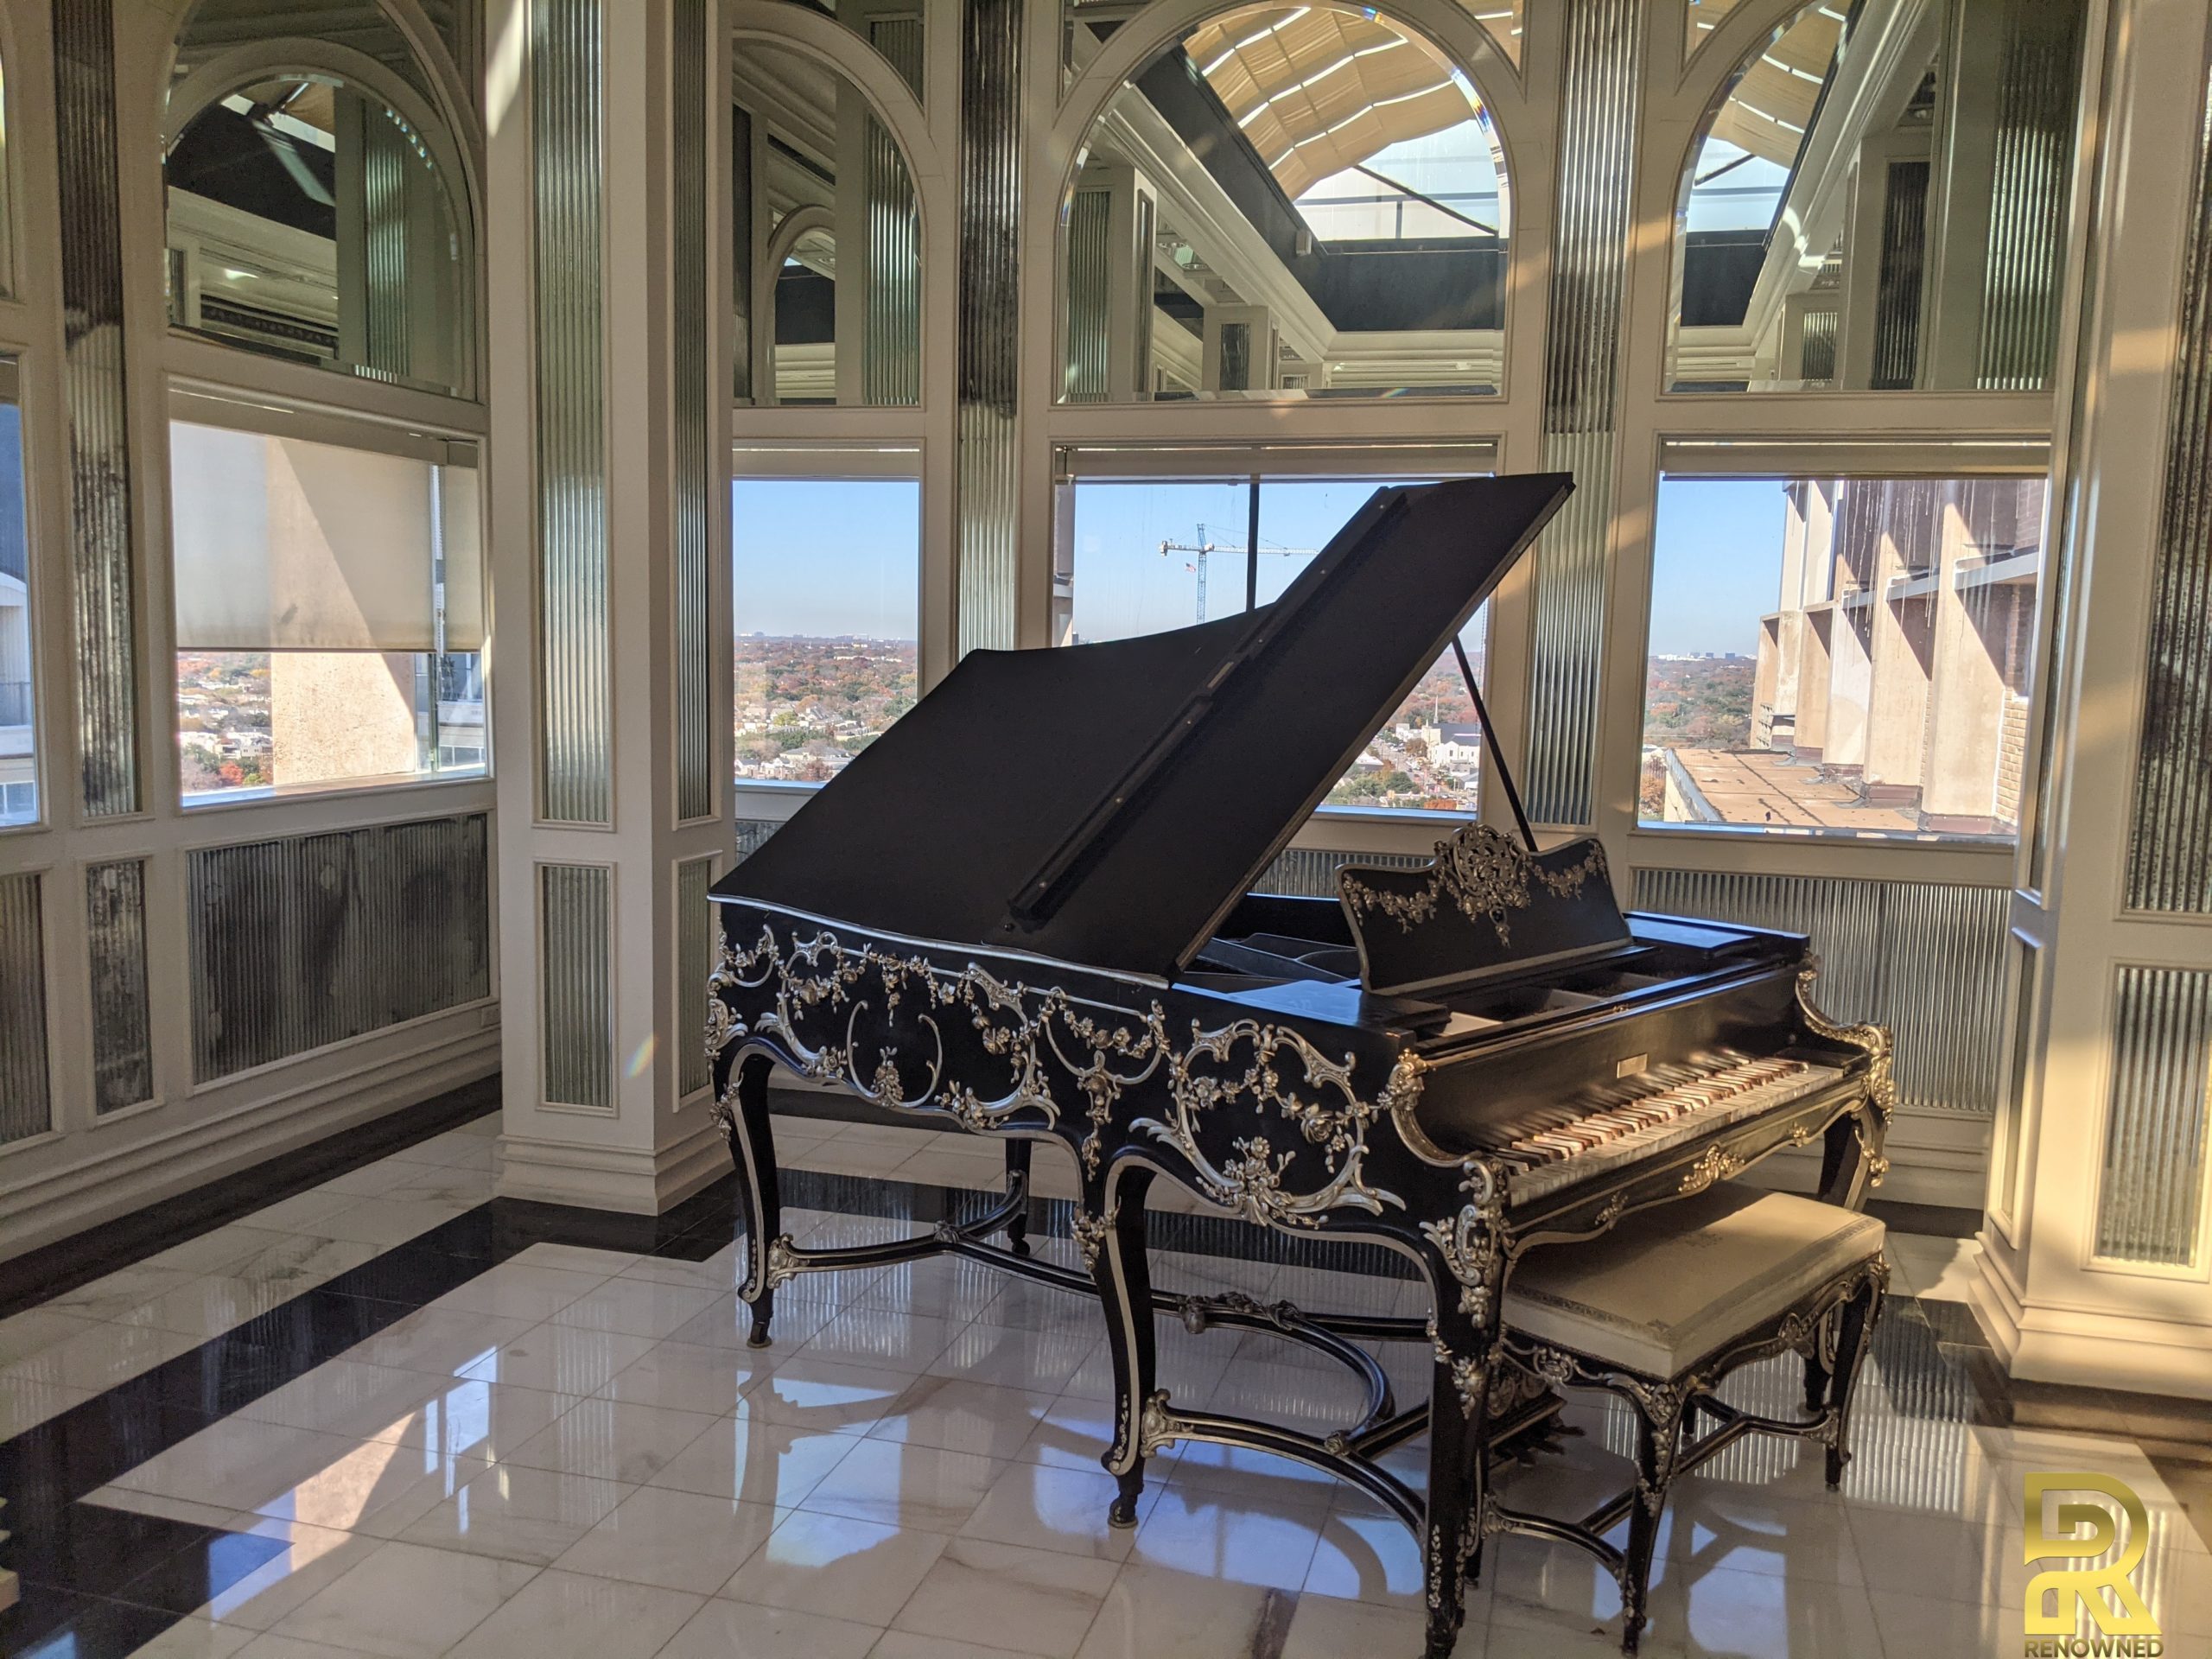 Wm Knabe Co Louis XV Style Grand Piano | Wood Refinishing Dallas